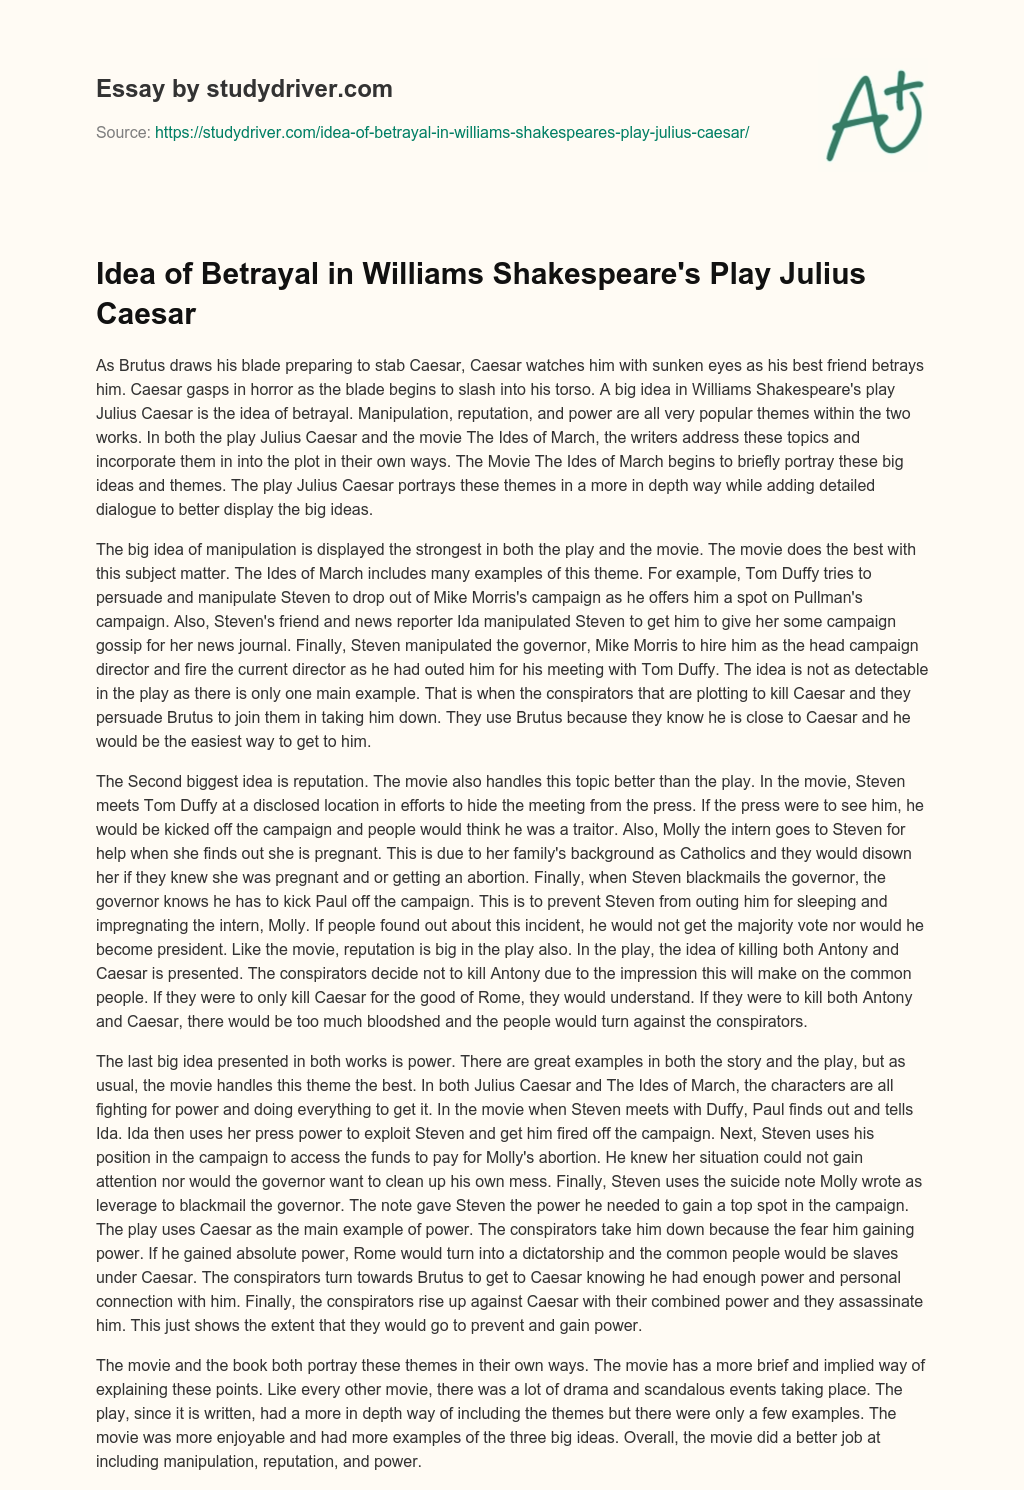 Idea of Betrayal in Williams Shakespeare’s Play Julius Caesar essay